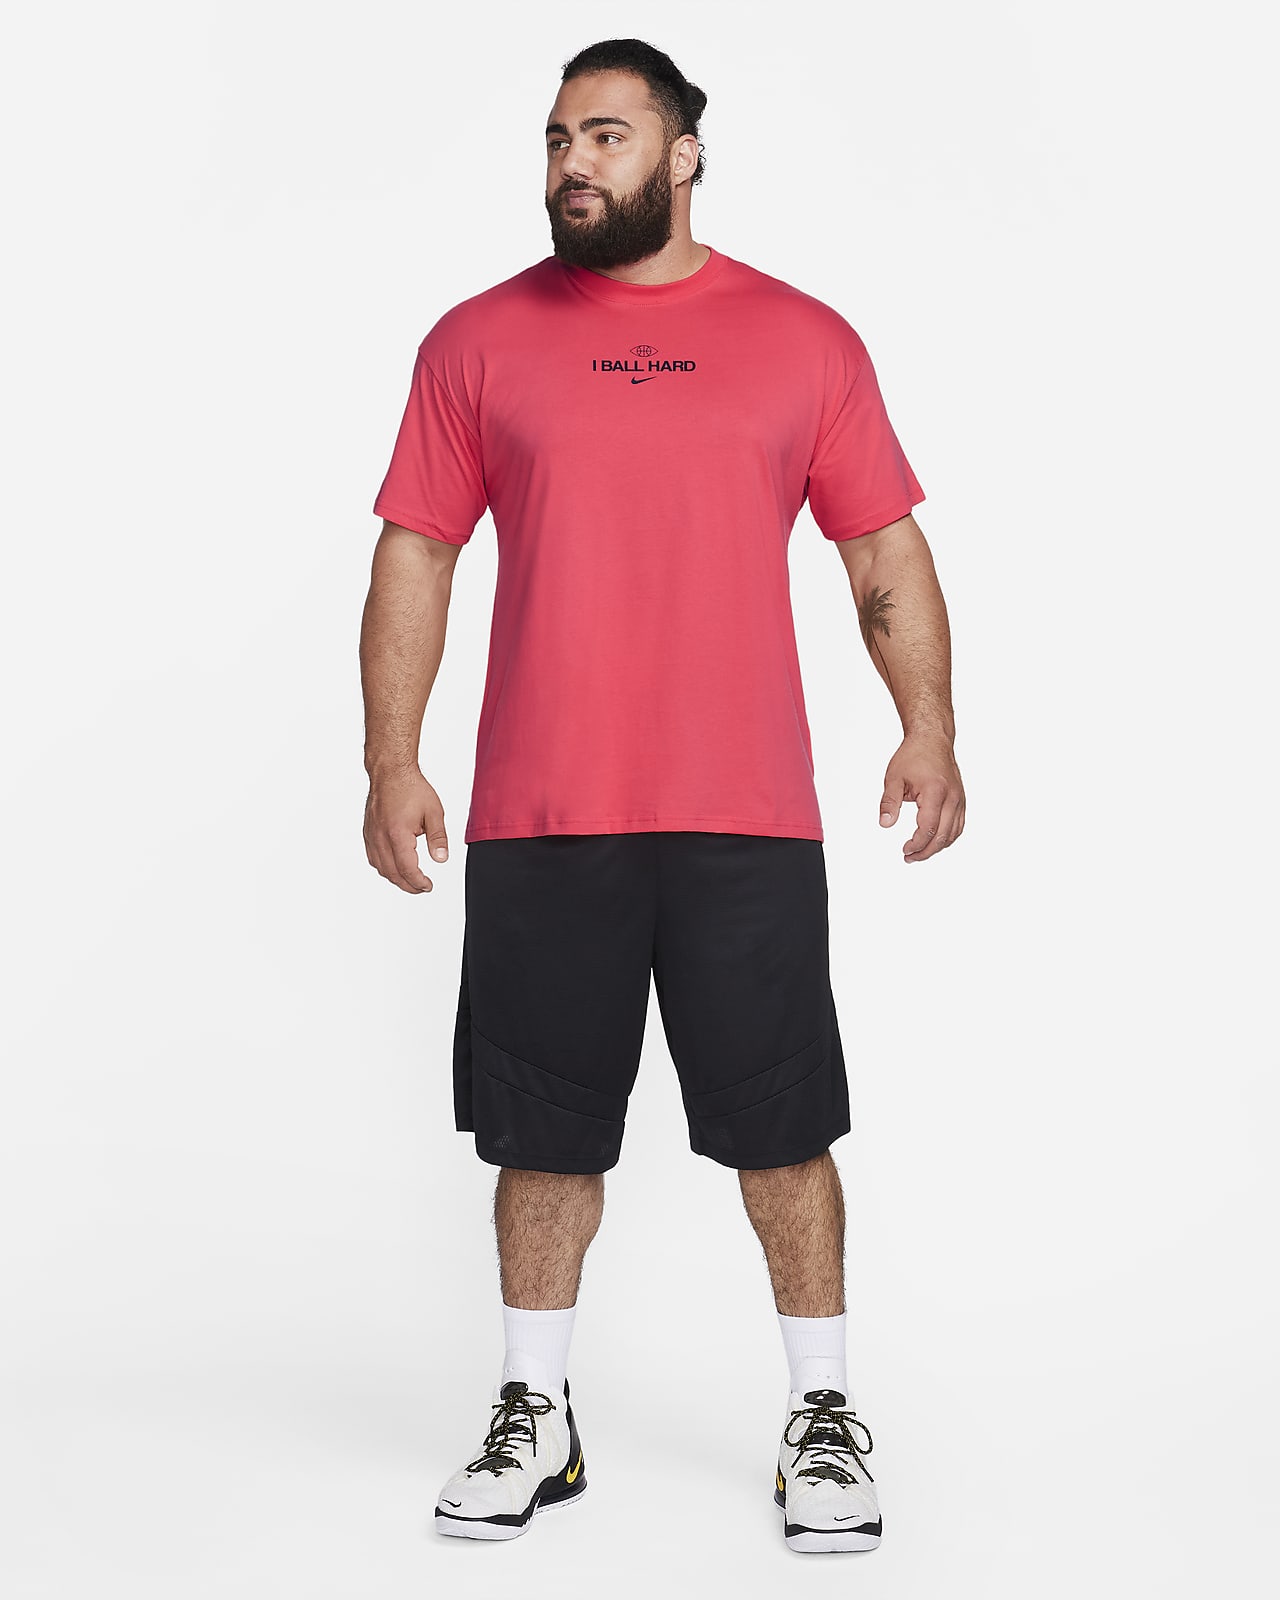 Nike Men's Max90 Bring It Out T-Shirt, Medium, Dark Russet